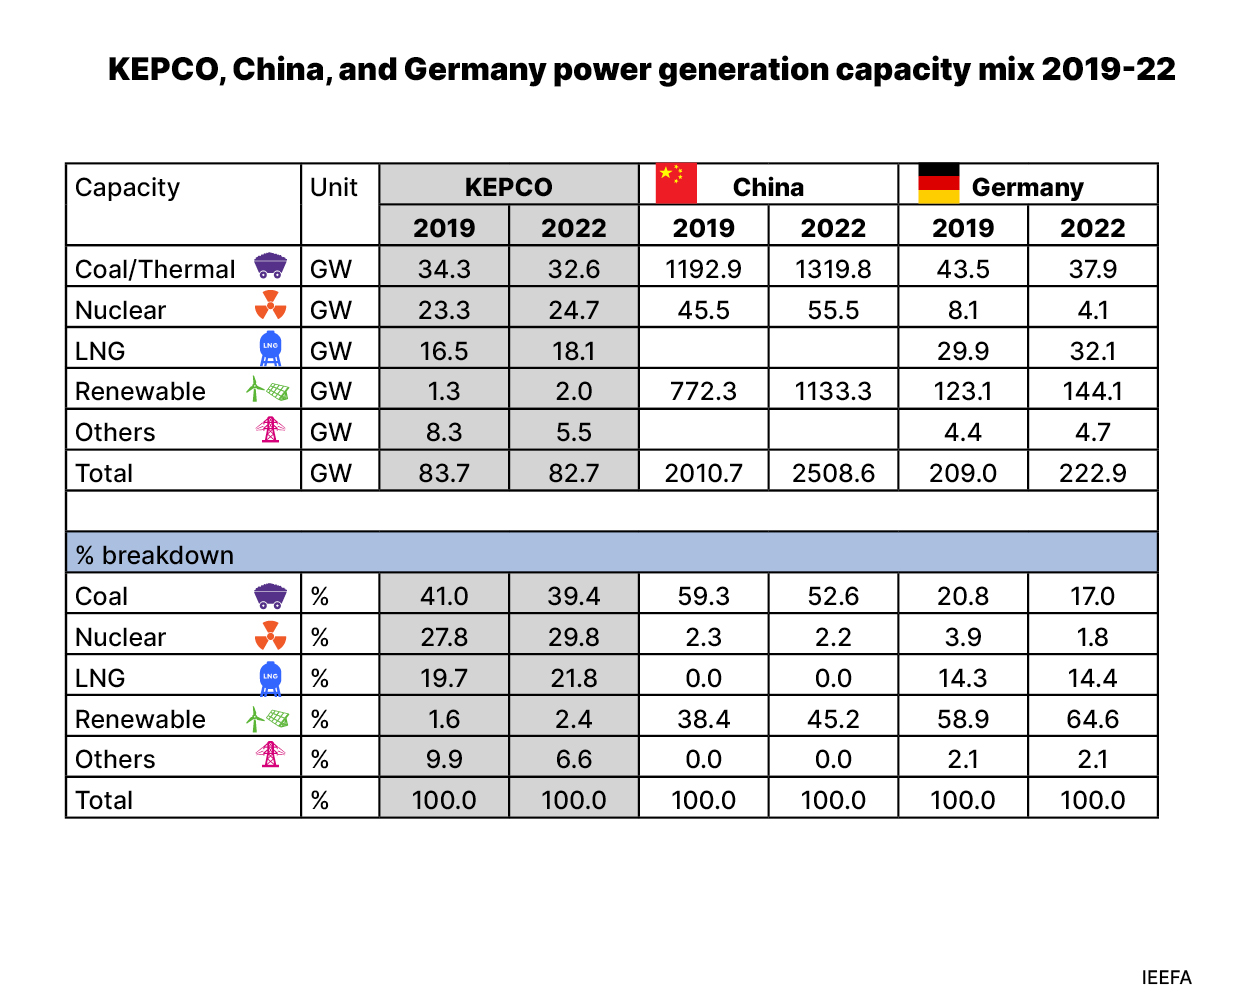 KEPCO, China and Germany